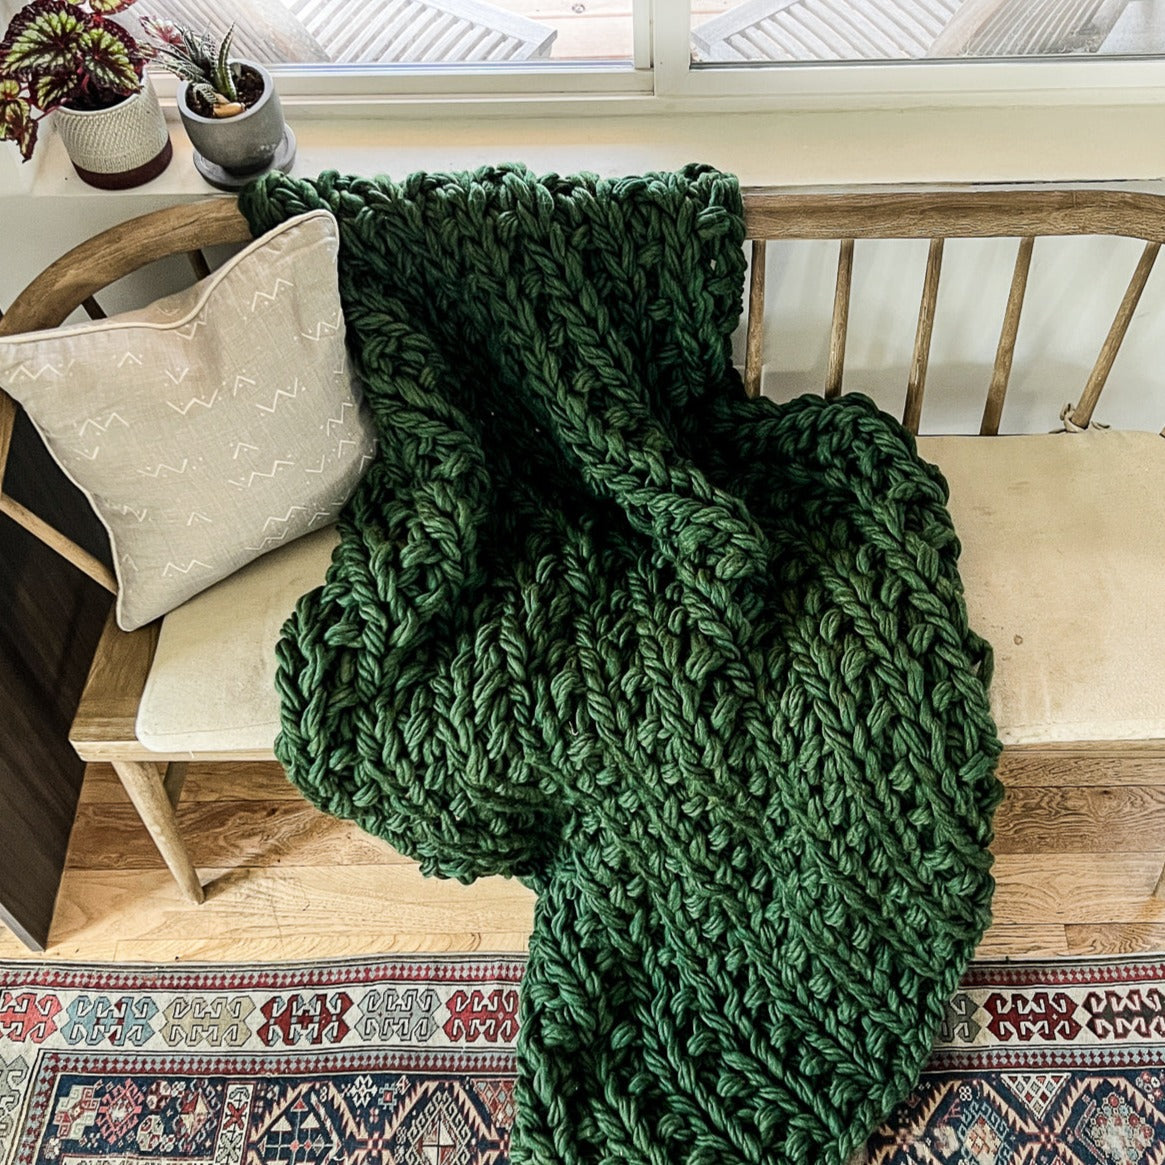 Arm Knitting Kit - The Arm Knit Blanket